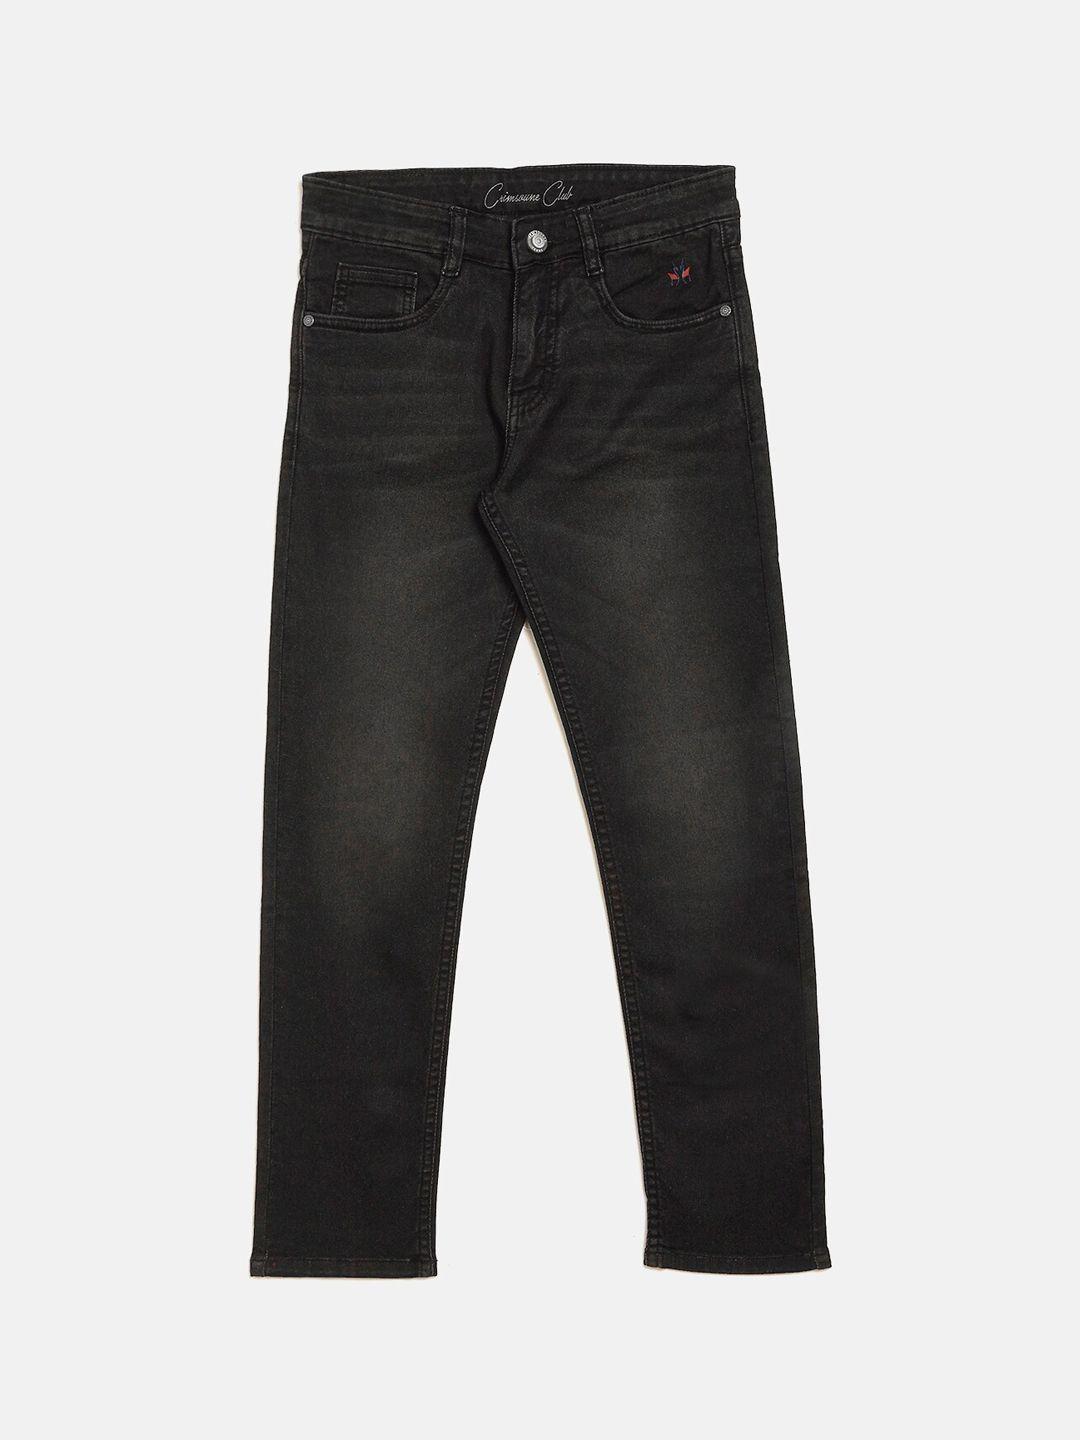 crimsoune club boys black slim fit mid-rise clean look jeans